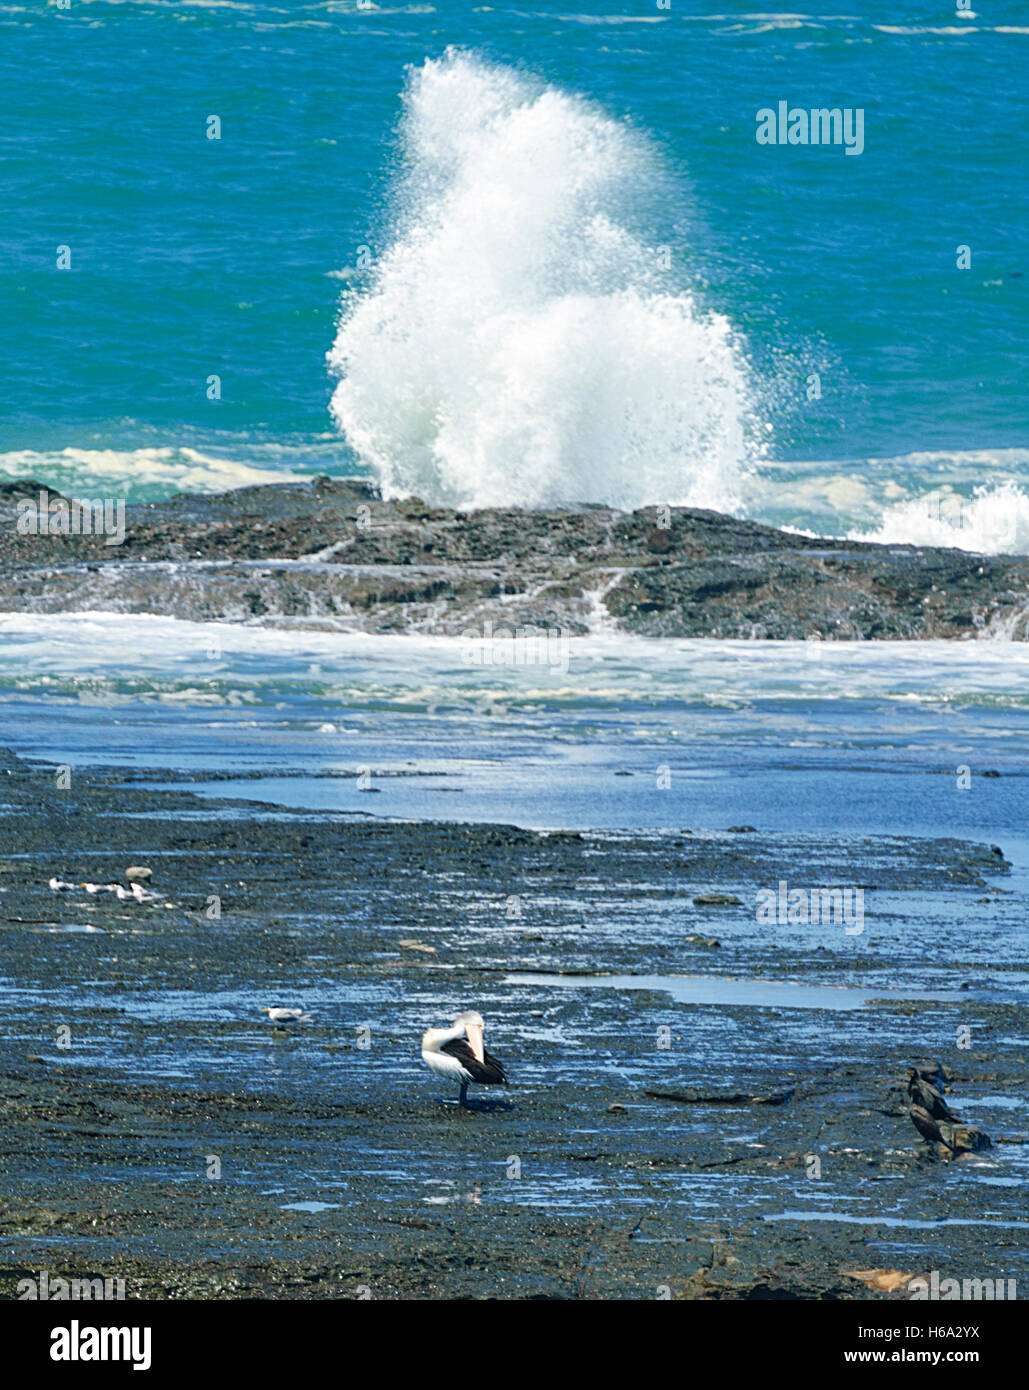 Australian Pelican (Pelecanus conspicillatus) preening on the rock shelf during a swell on the Illawarra Coast, Gerroa Headland, New South Wales, NSW, Stock Photo